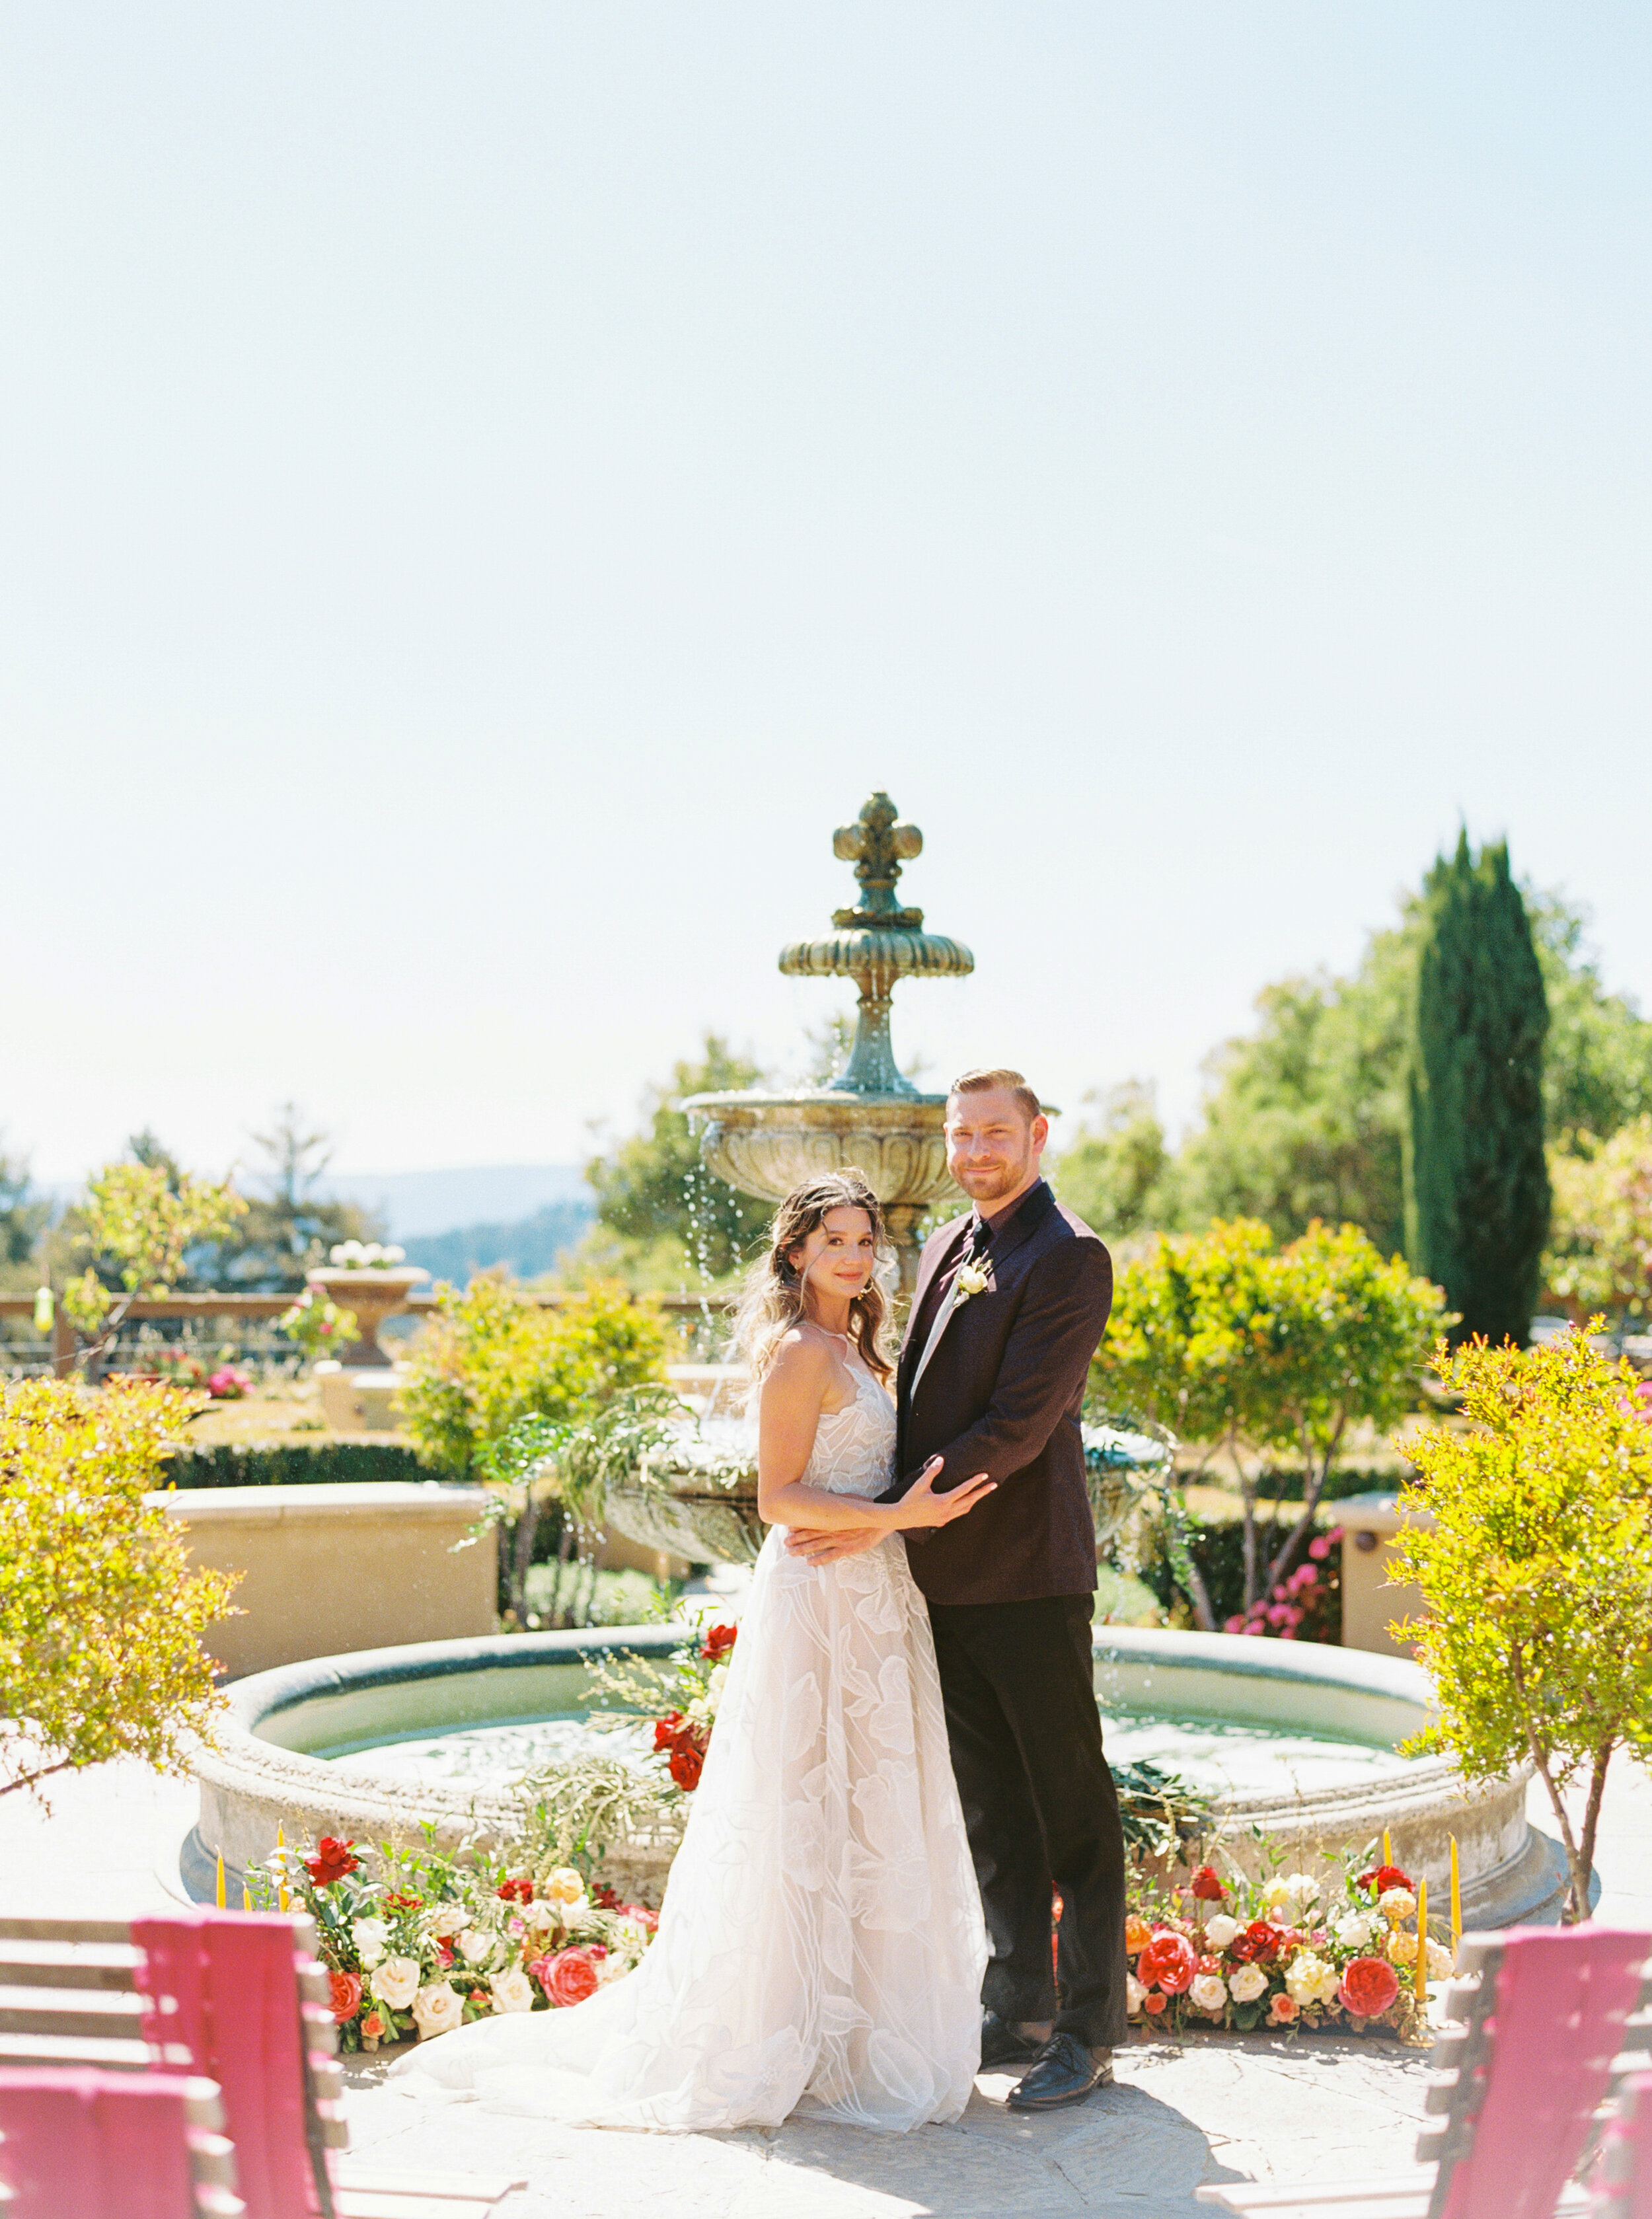 Regale Winery and Vineyards Wedding - Sarahi Hadden Photography-454.jpg